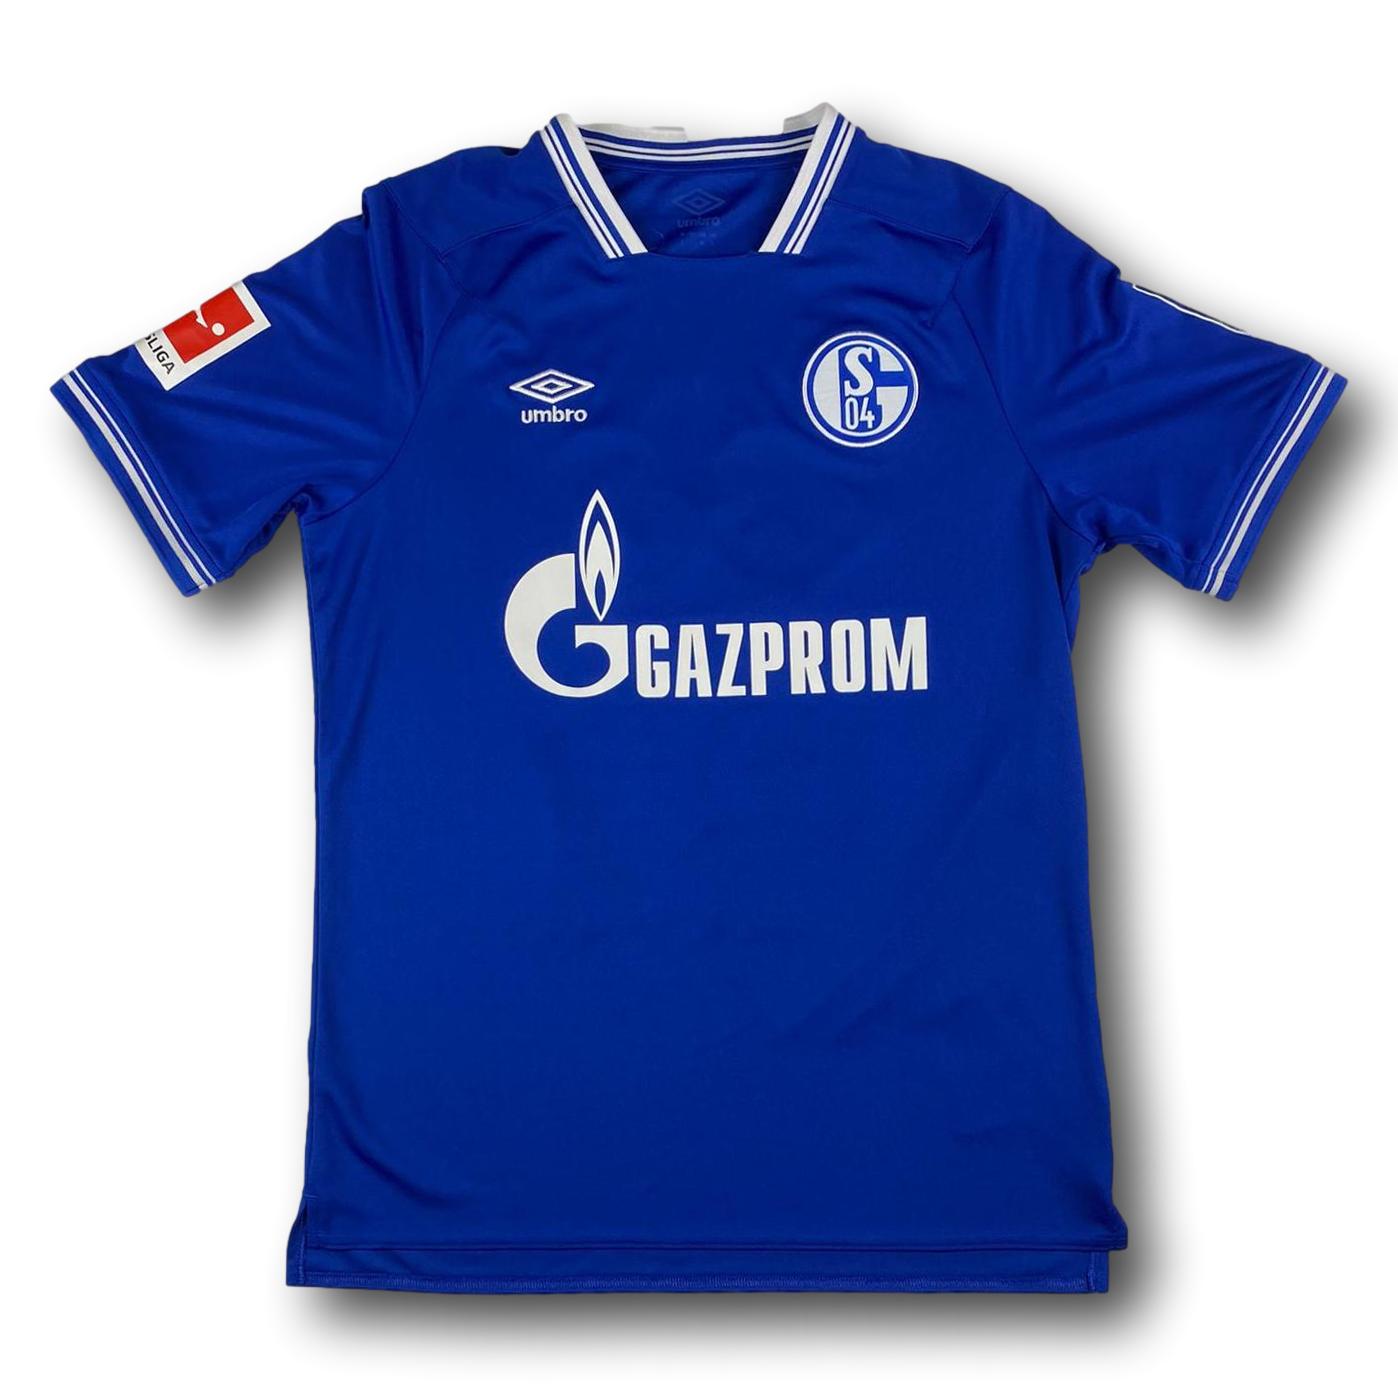 FC Schalke 04 2020-21 Heim L umbro Ibisevic #11